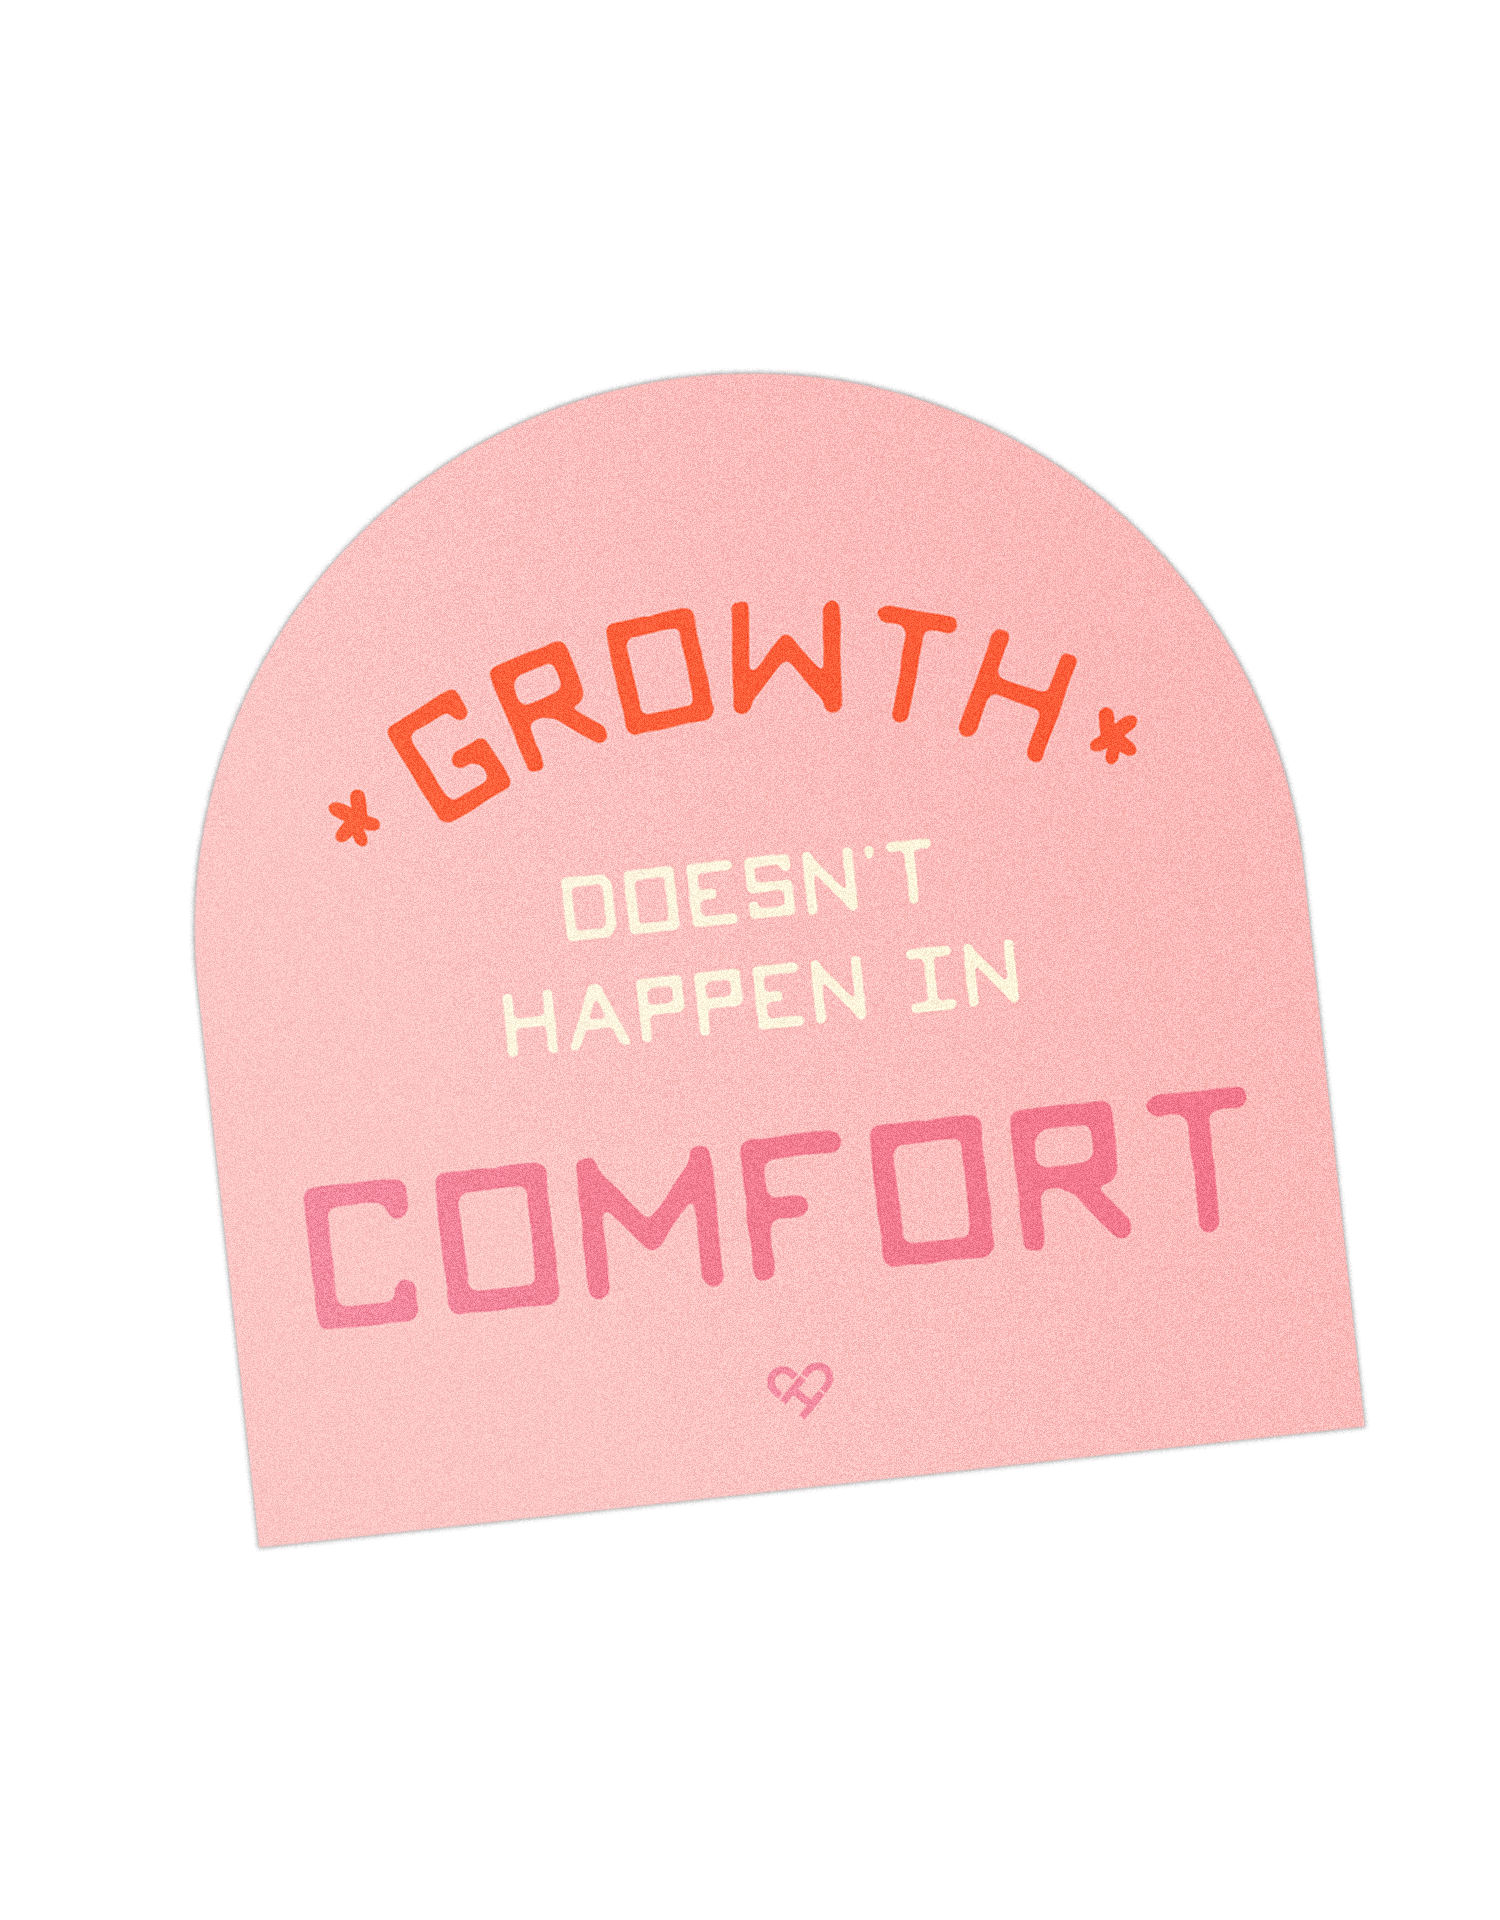 Growth Doesn't Happen in Comfort Sticker